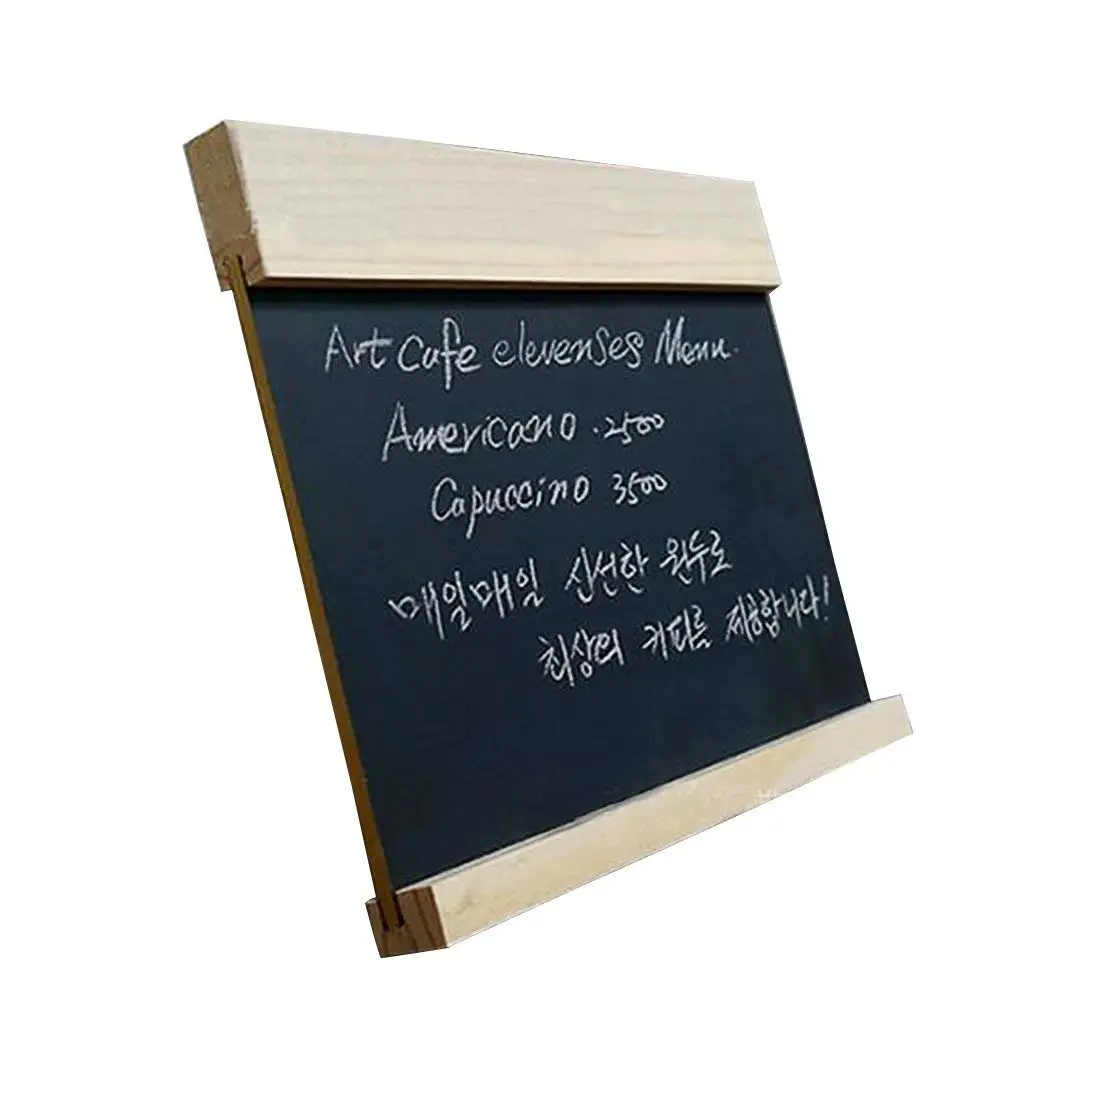 Cheap Restaurant Chalkboard Signs Find Restaurant Chalkboard Signs Deals On Line At Alibaba Com